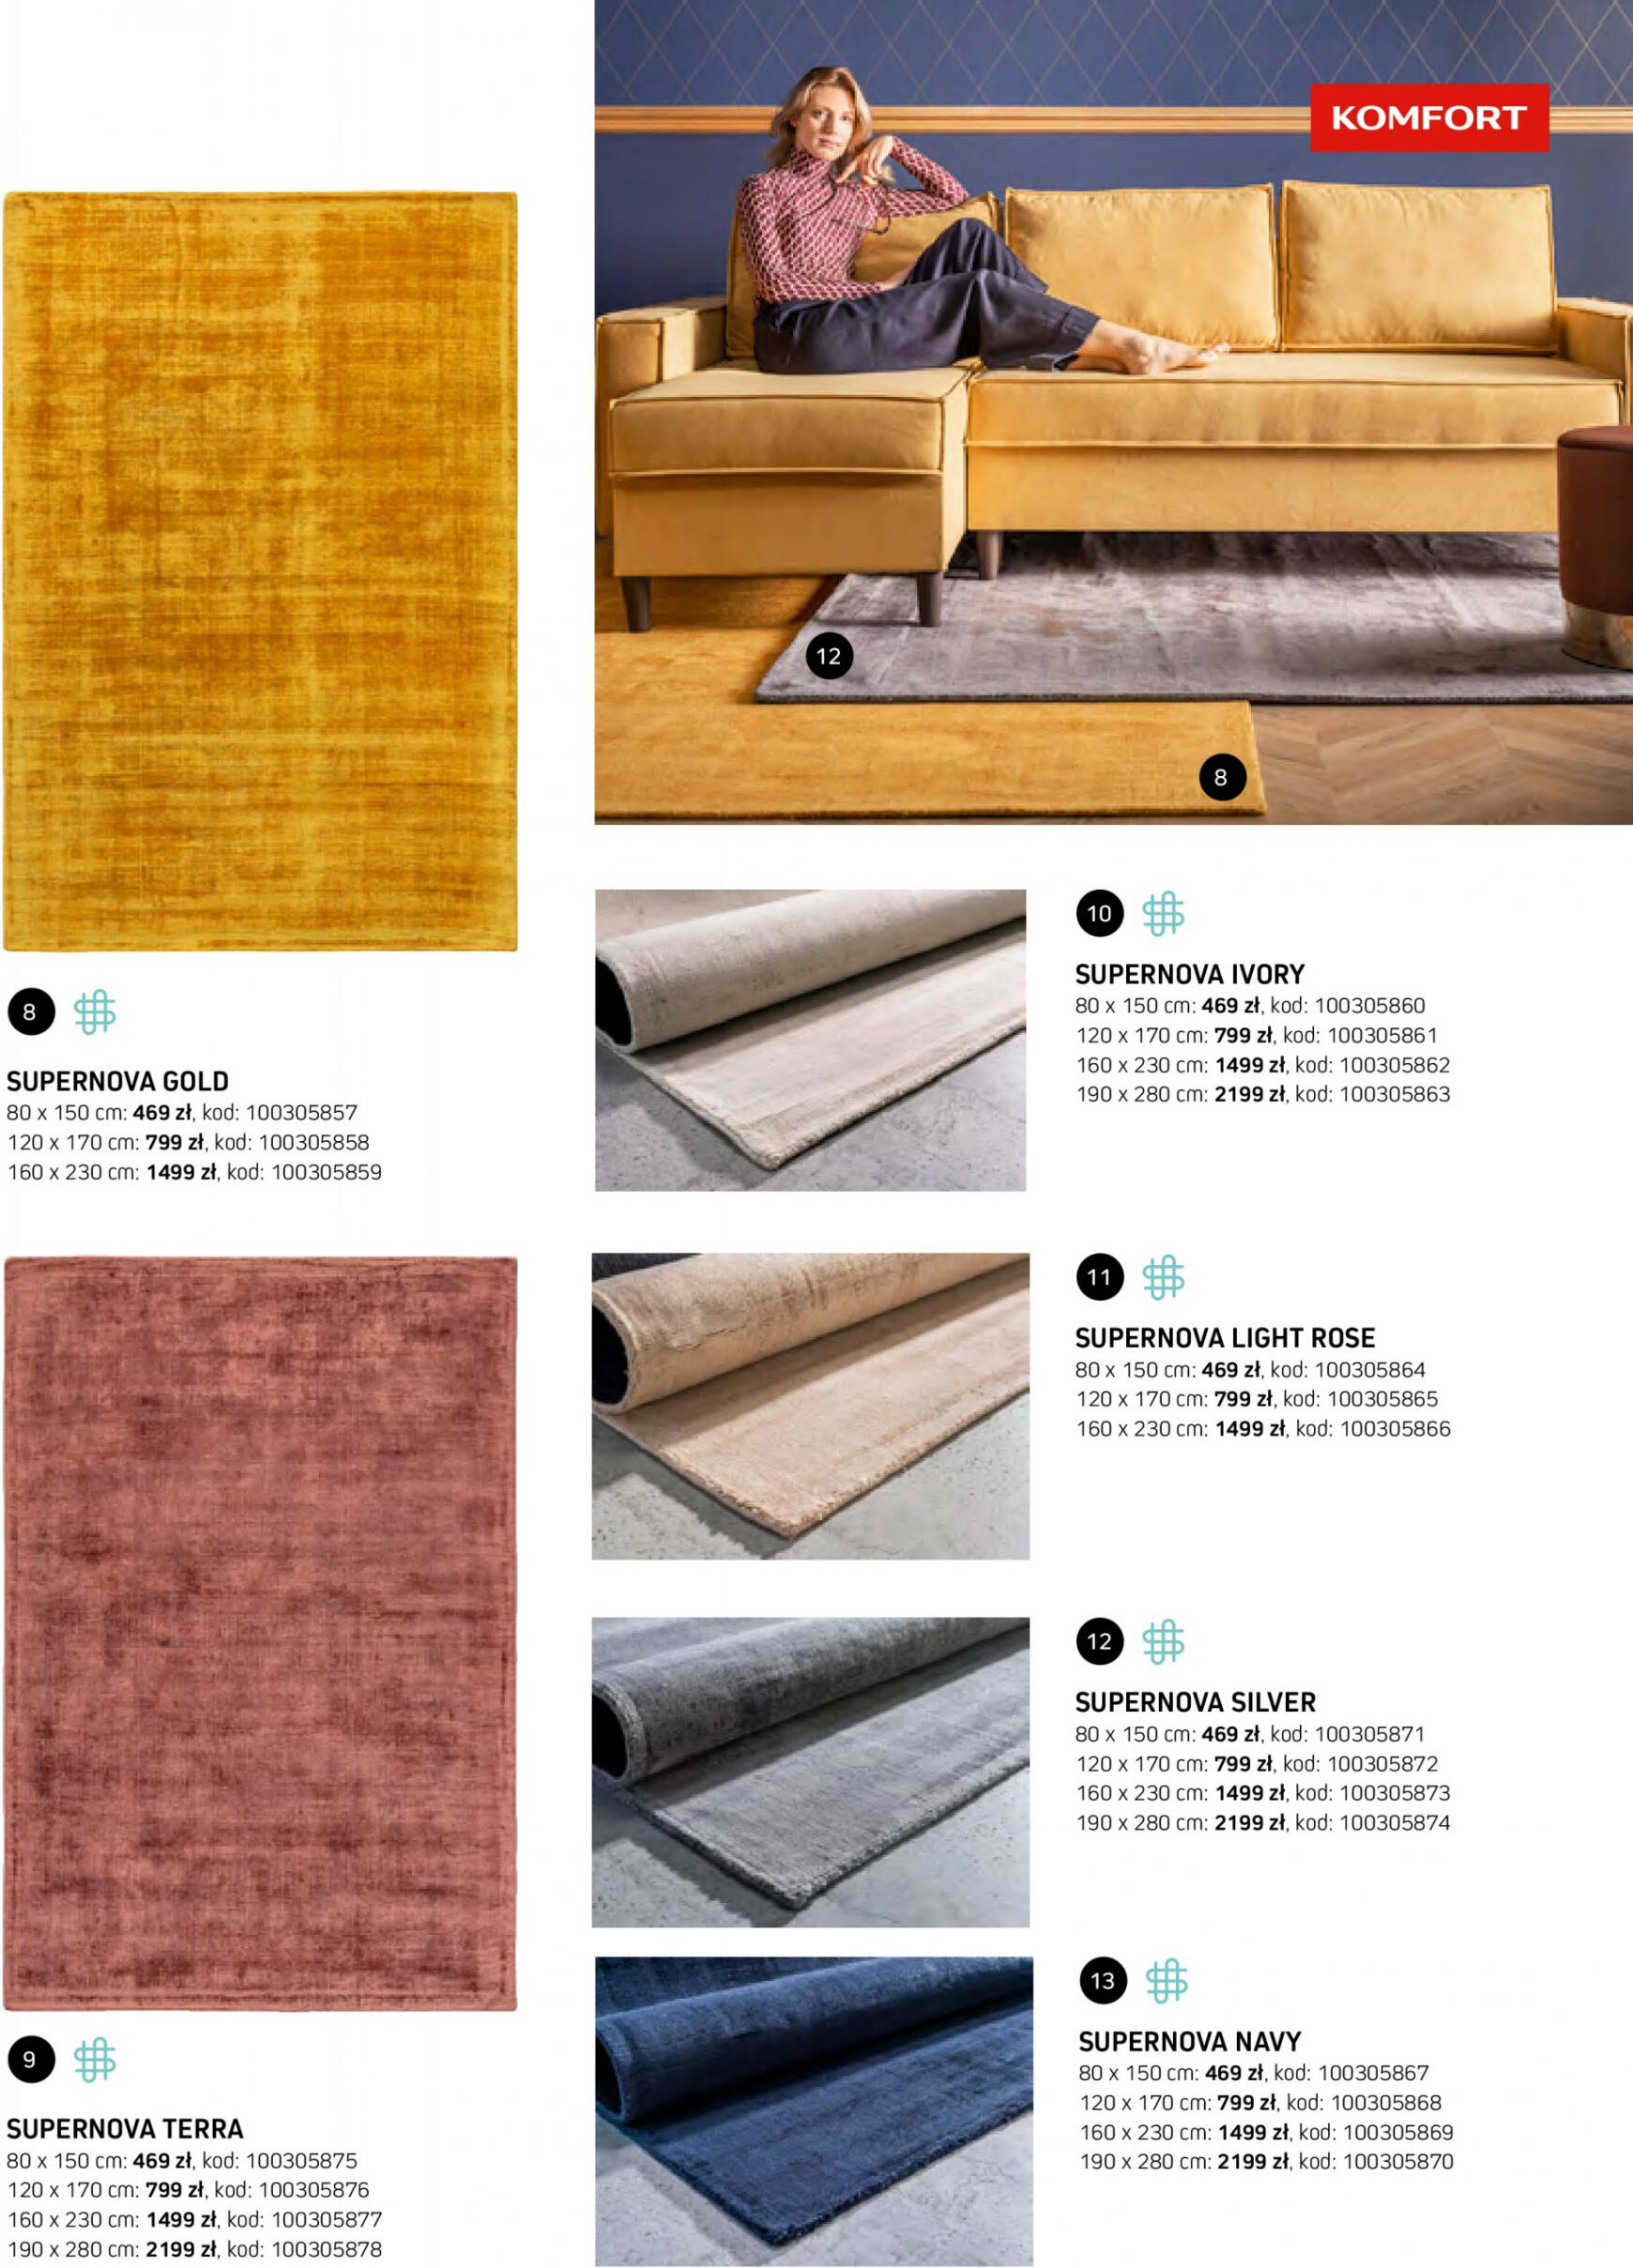 komfort - Komfort - Katalog dywany - page: 23